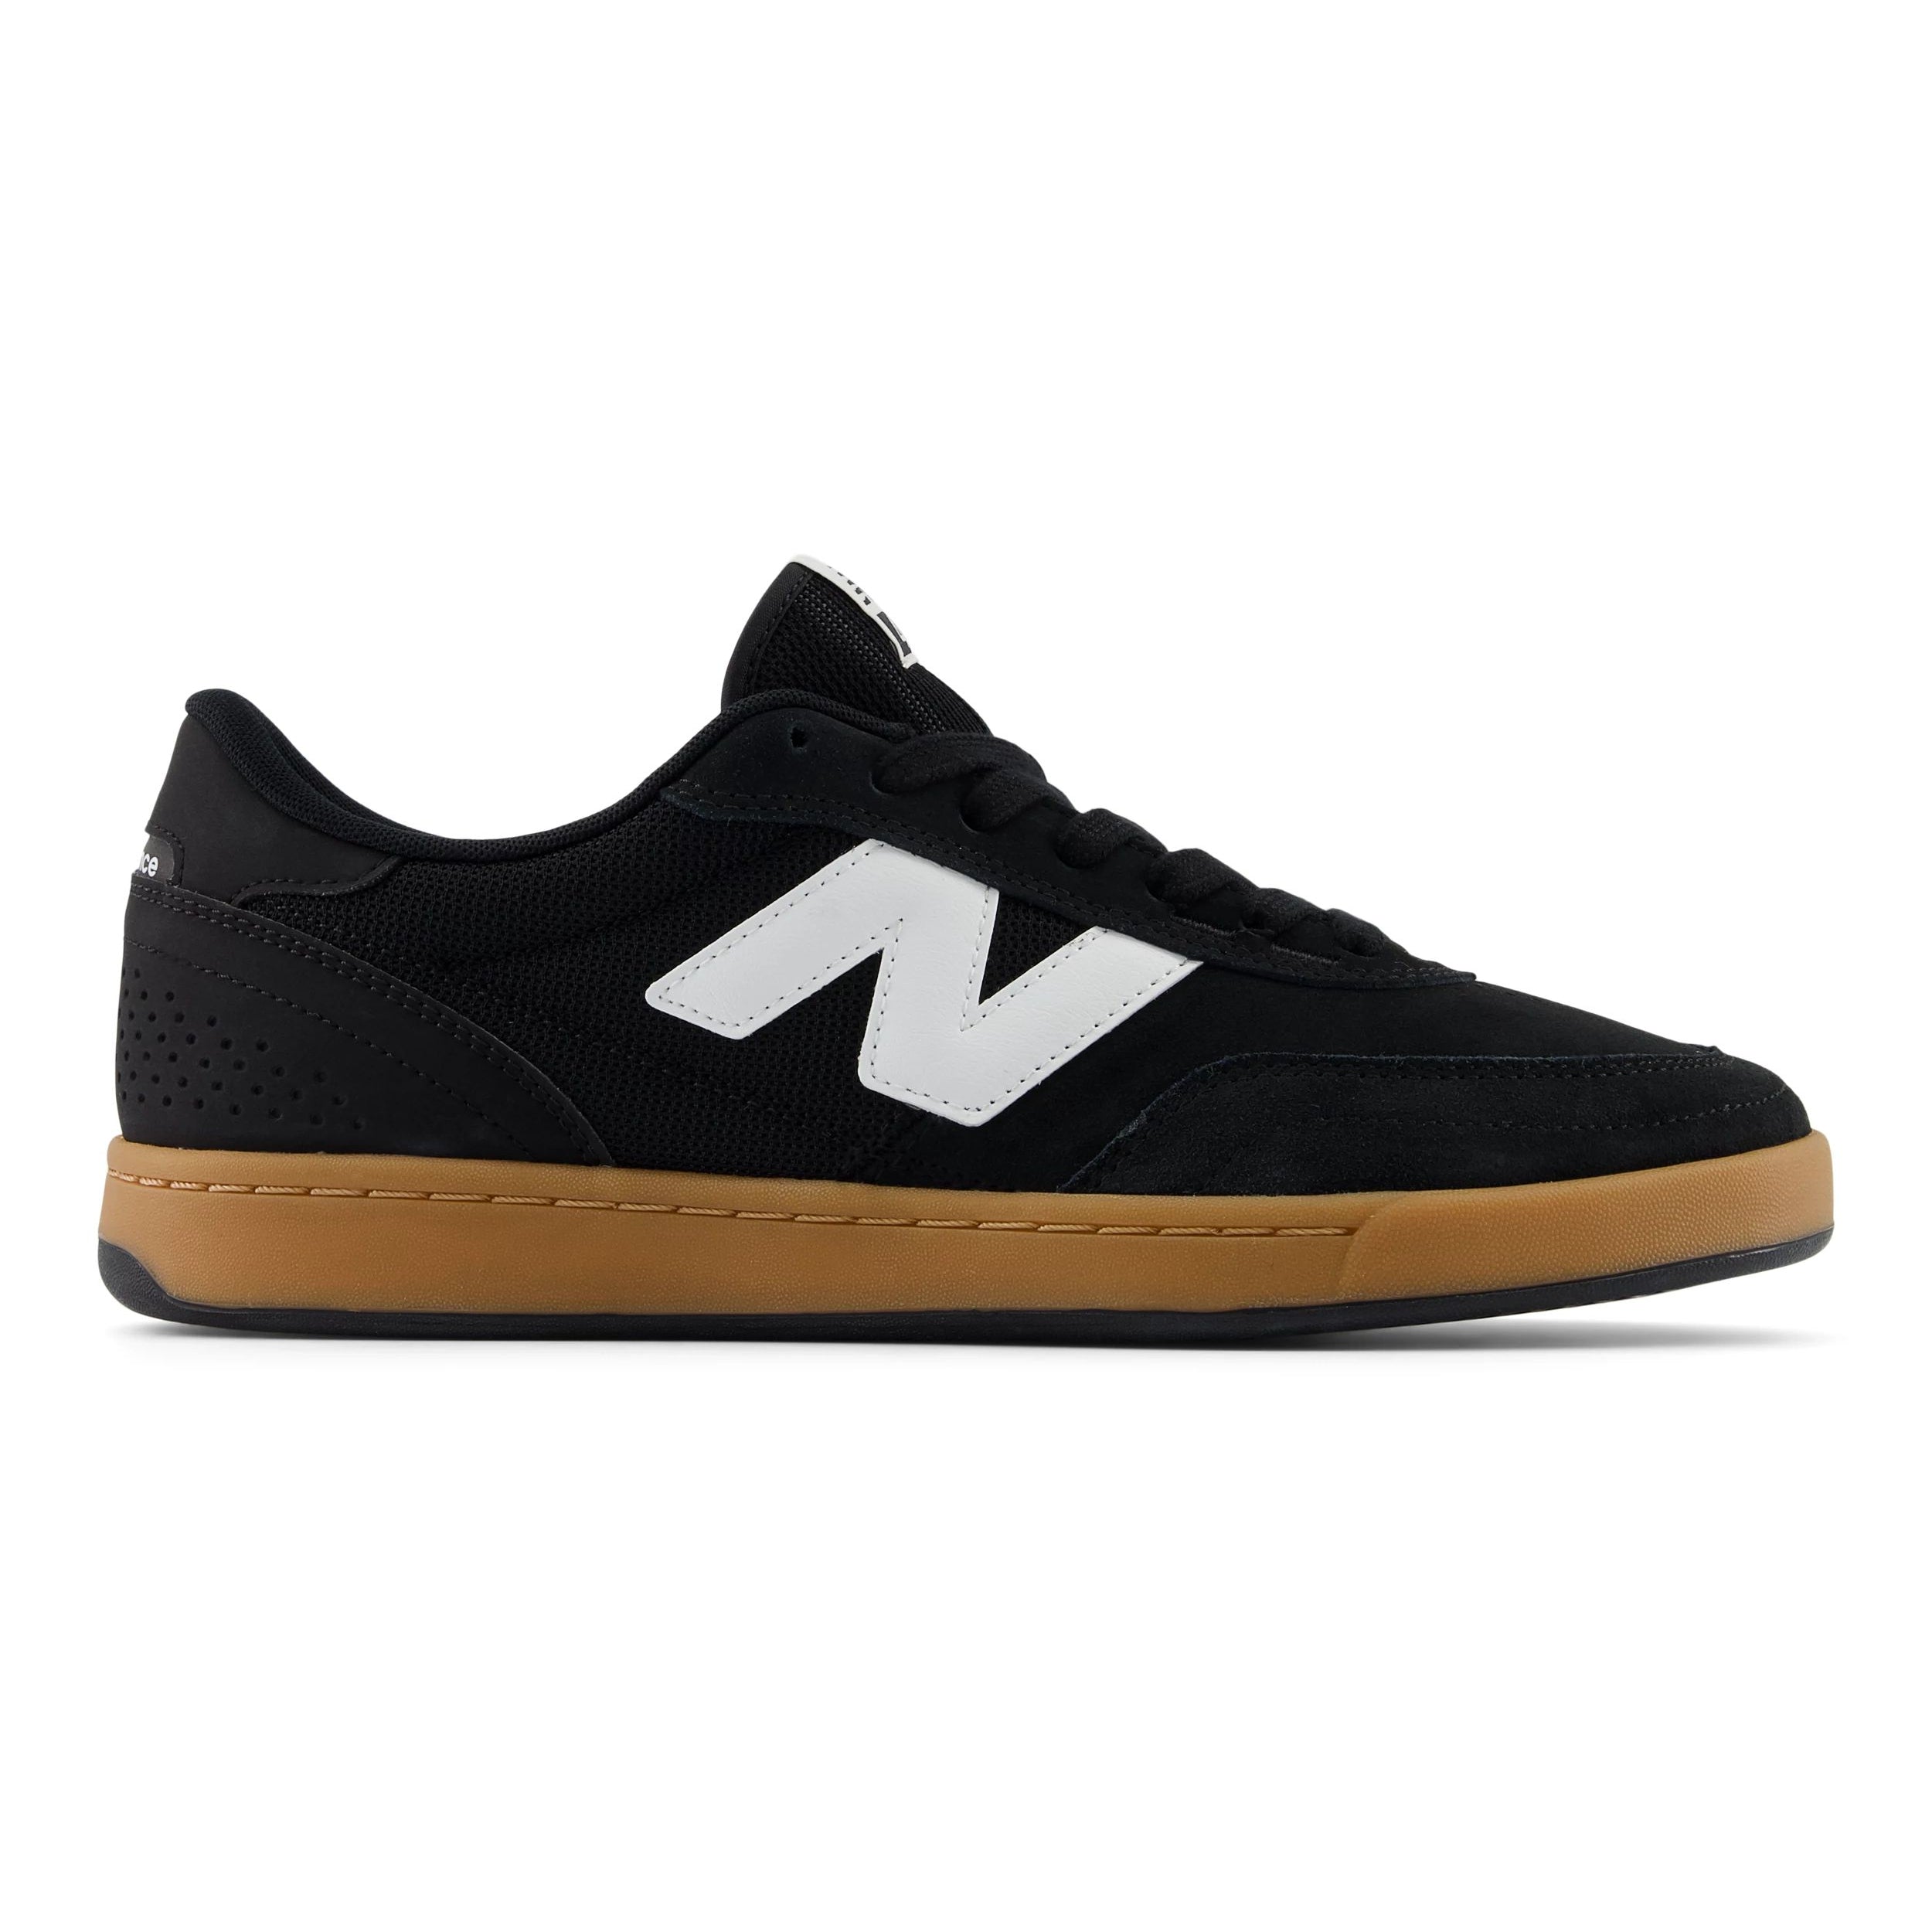 Black/Gum NM440 V2 NB Numeric Skate Shoe